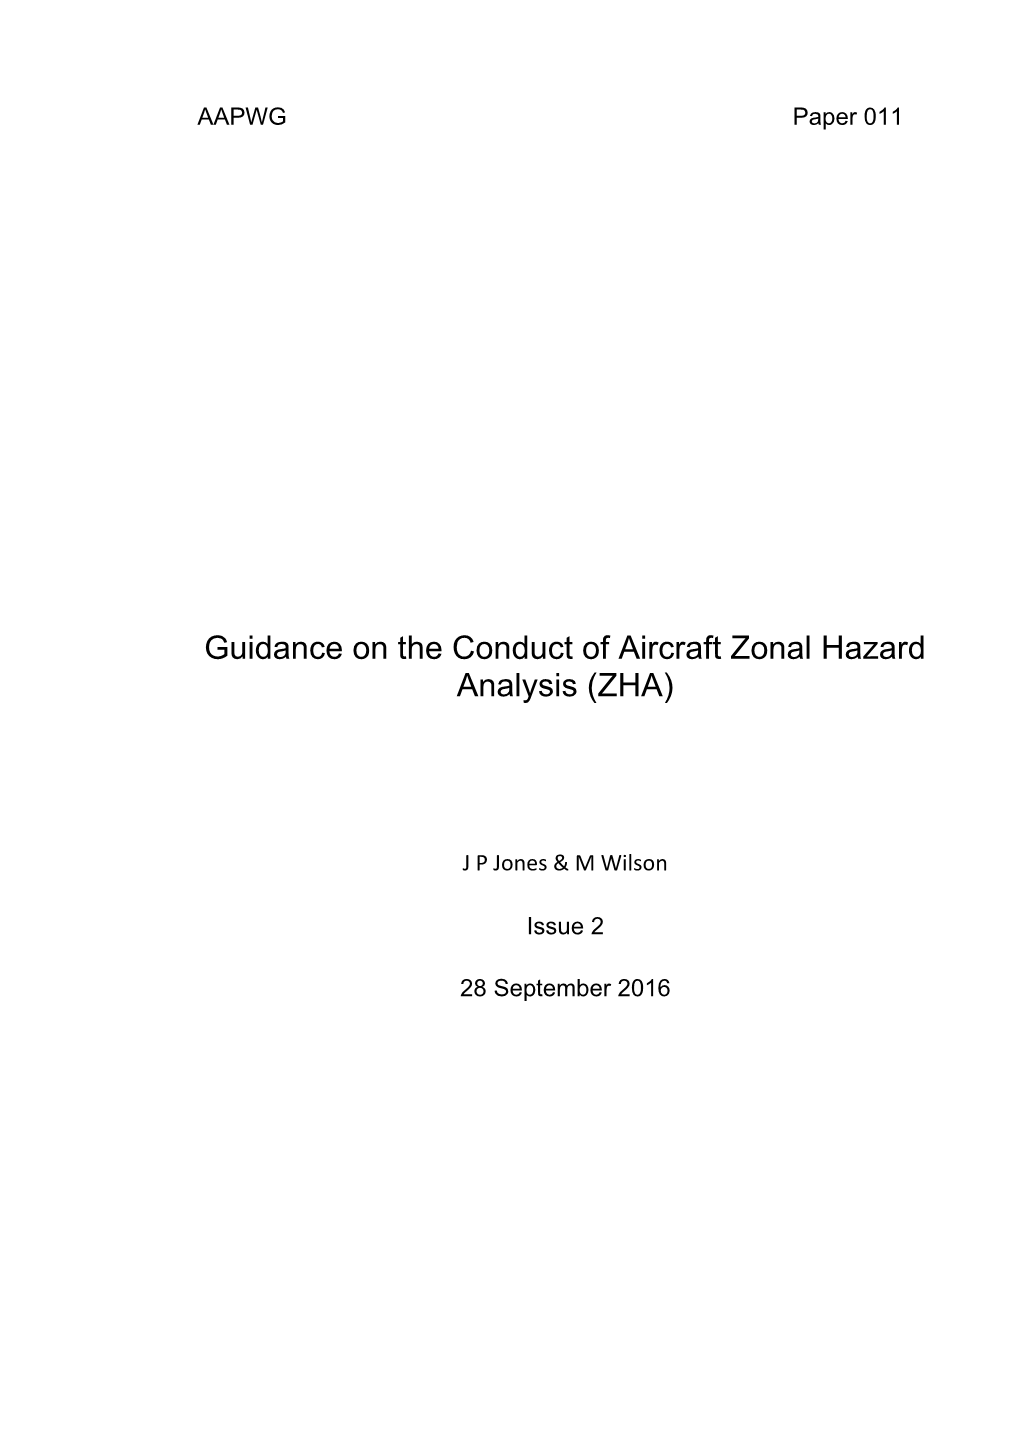 Guidance on the Conduct of Aircraft Zonal Hazard Analysis (ZHA)